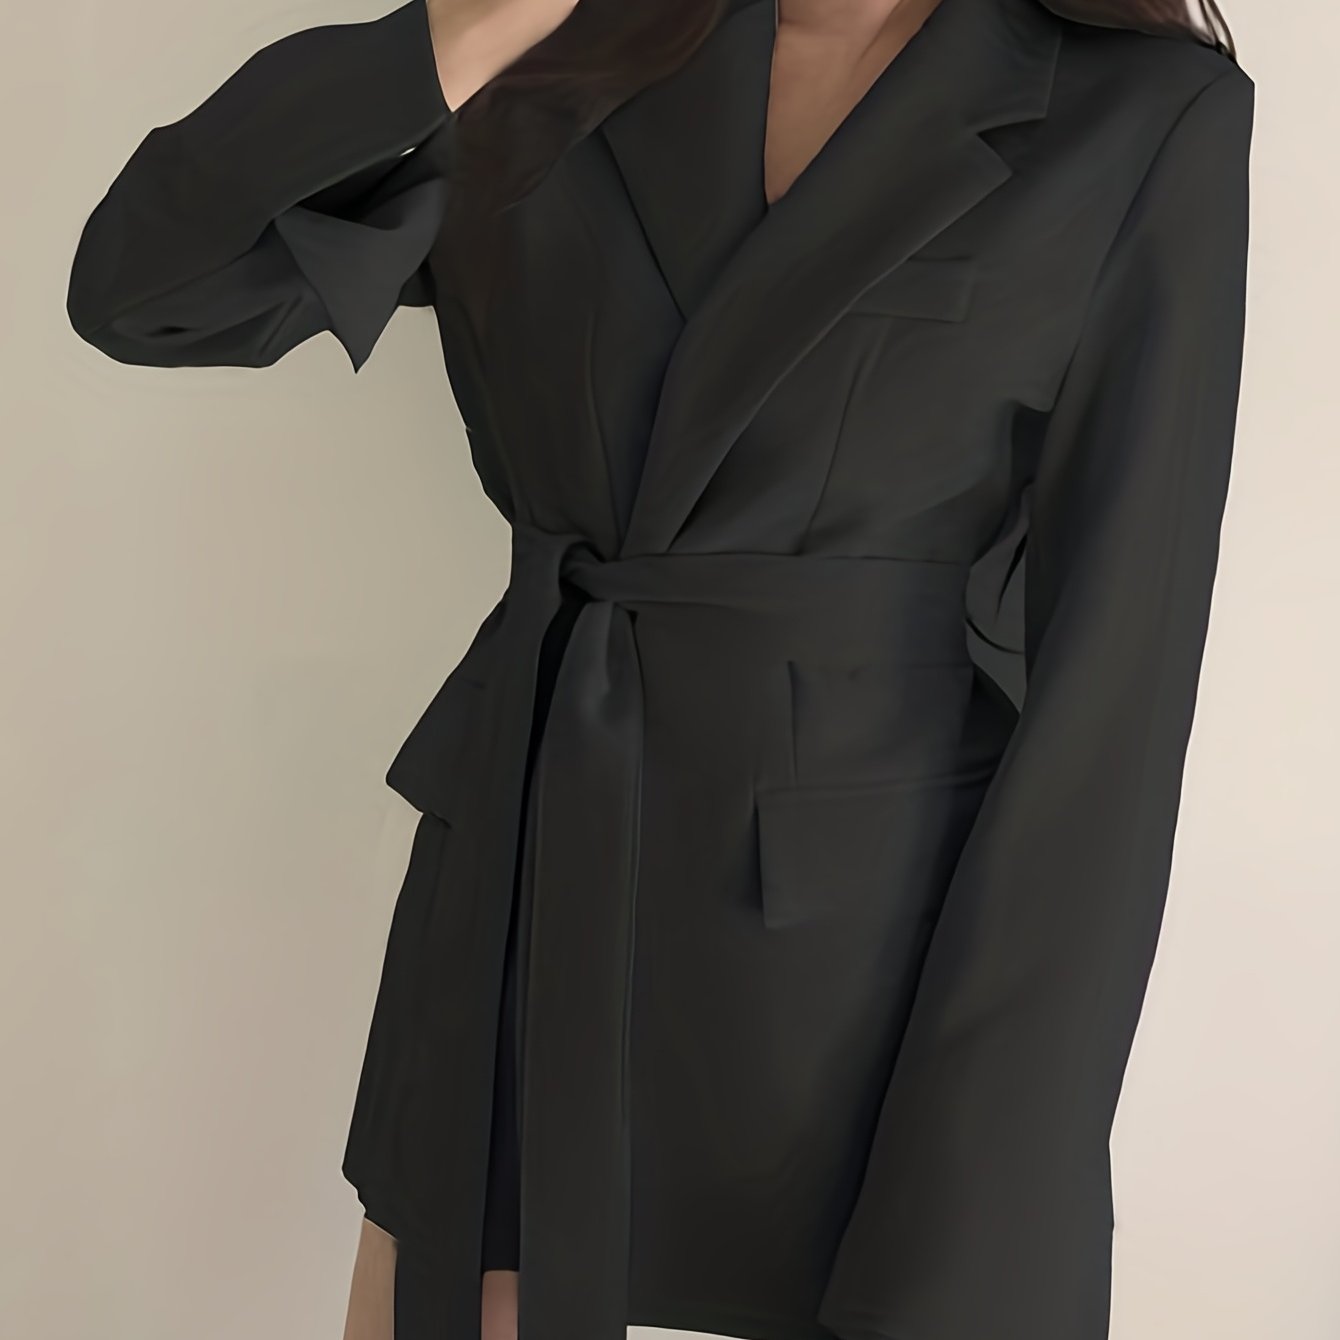 Antmvs Solid Tie-waist Lapel Blazer, Elegant Long Sleeve Outerwear For Work & Office, Women's Clothing